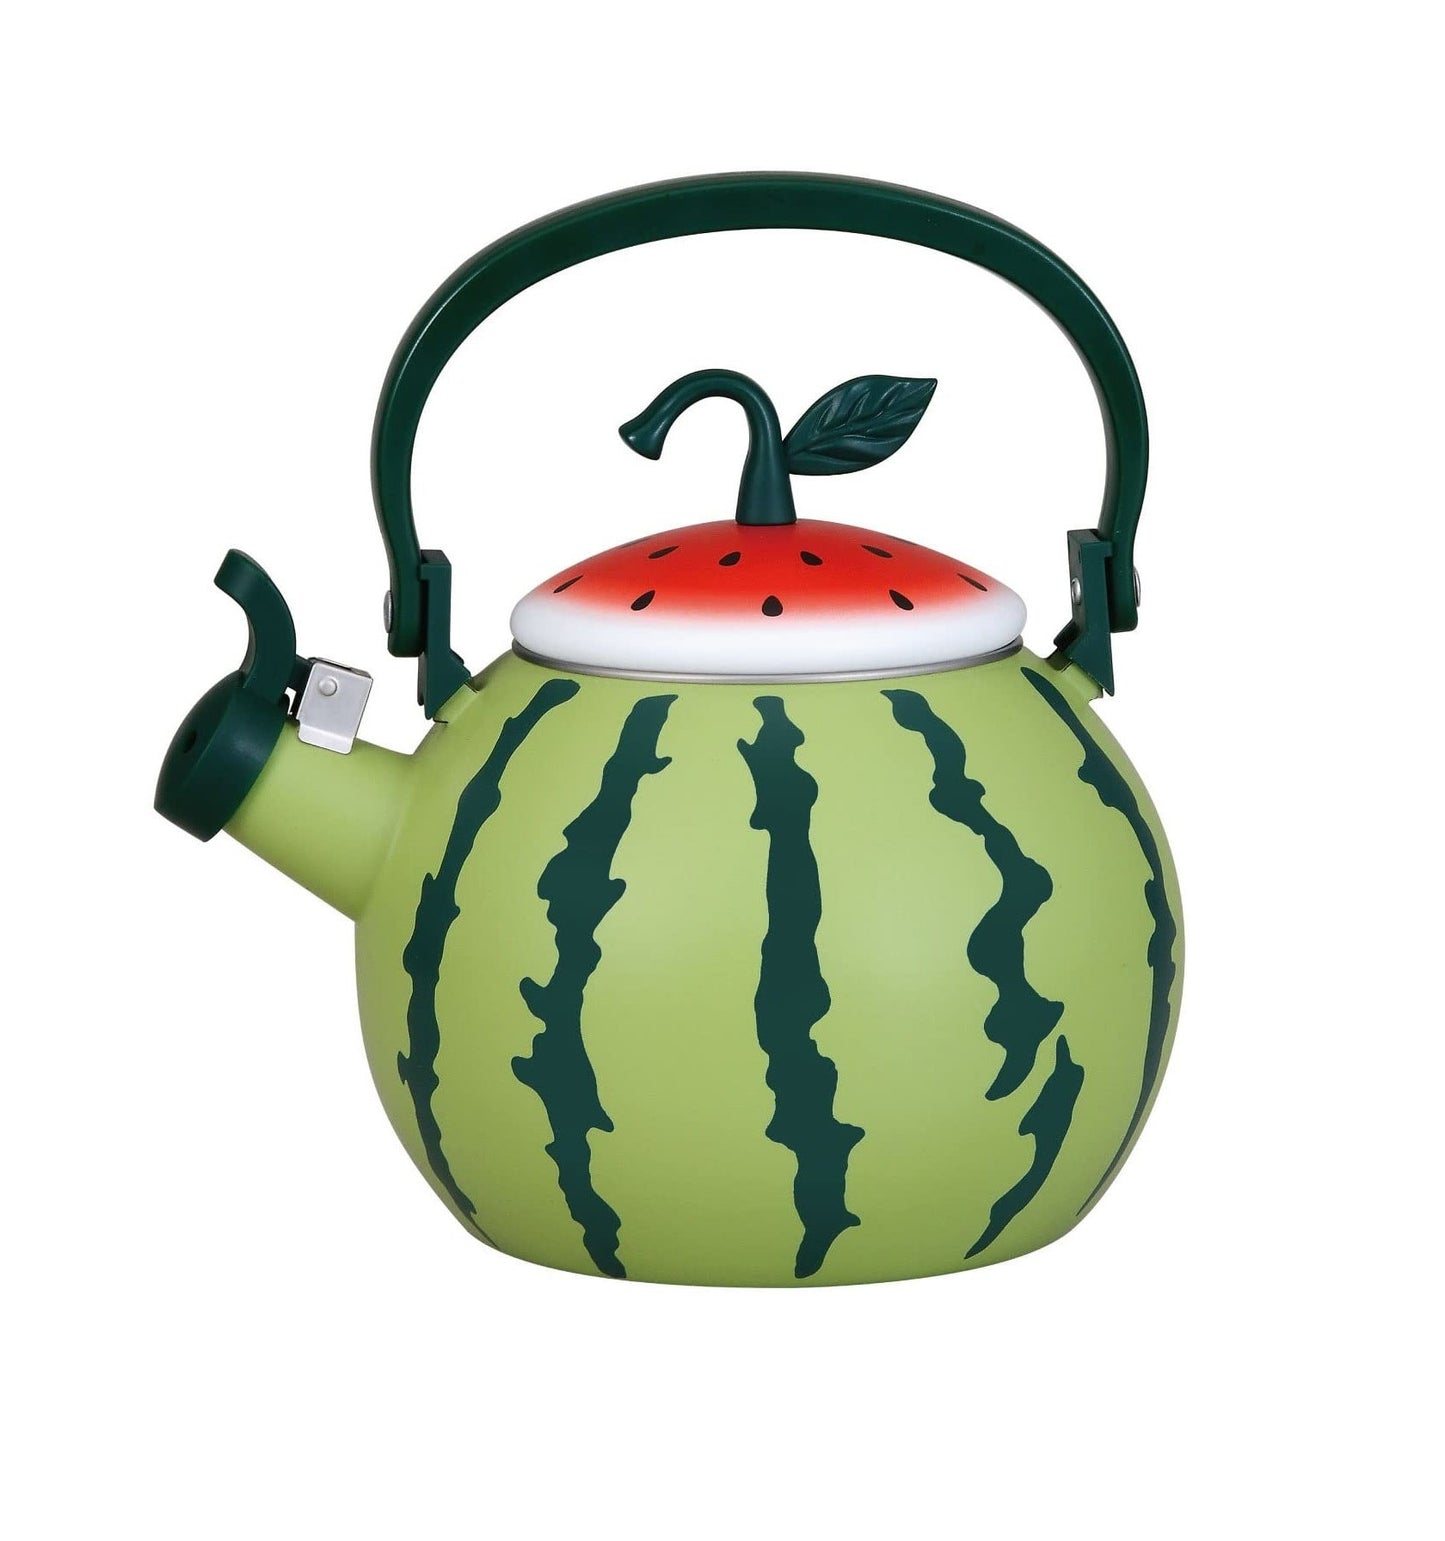 Watermelon Whistling Tea Kettle